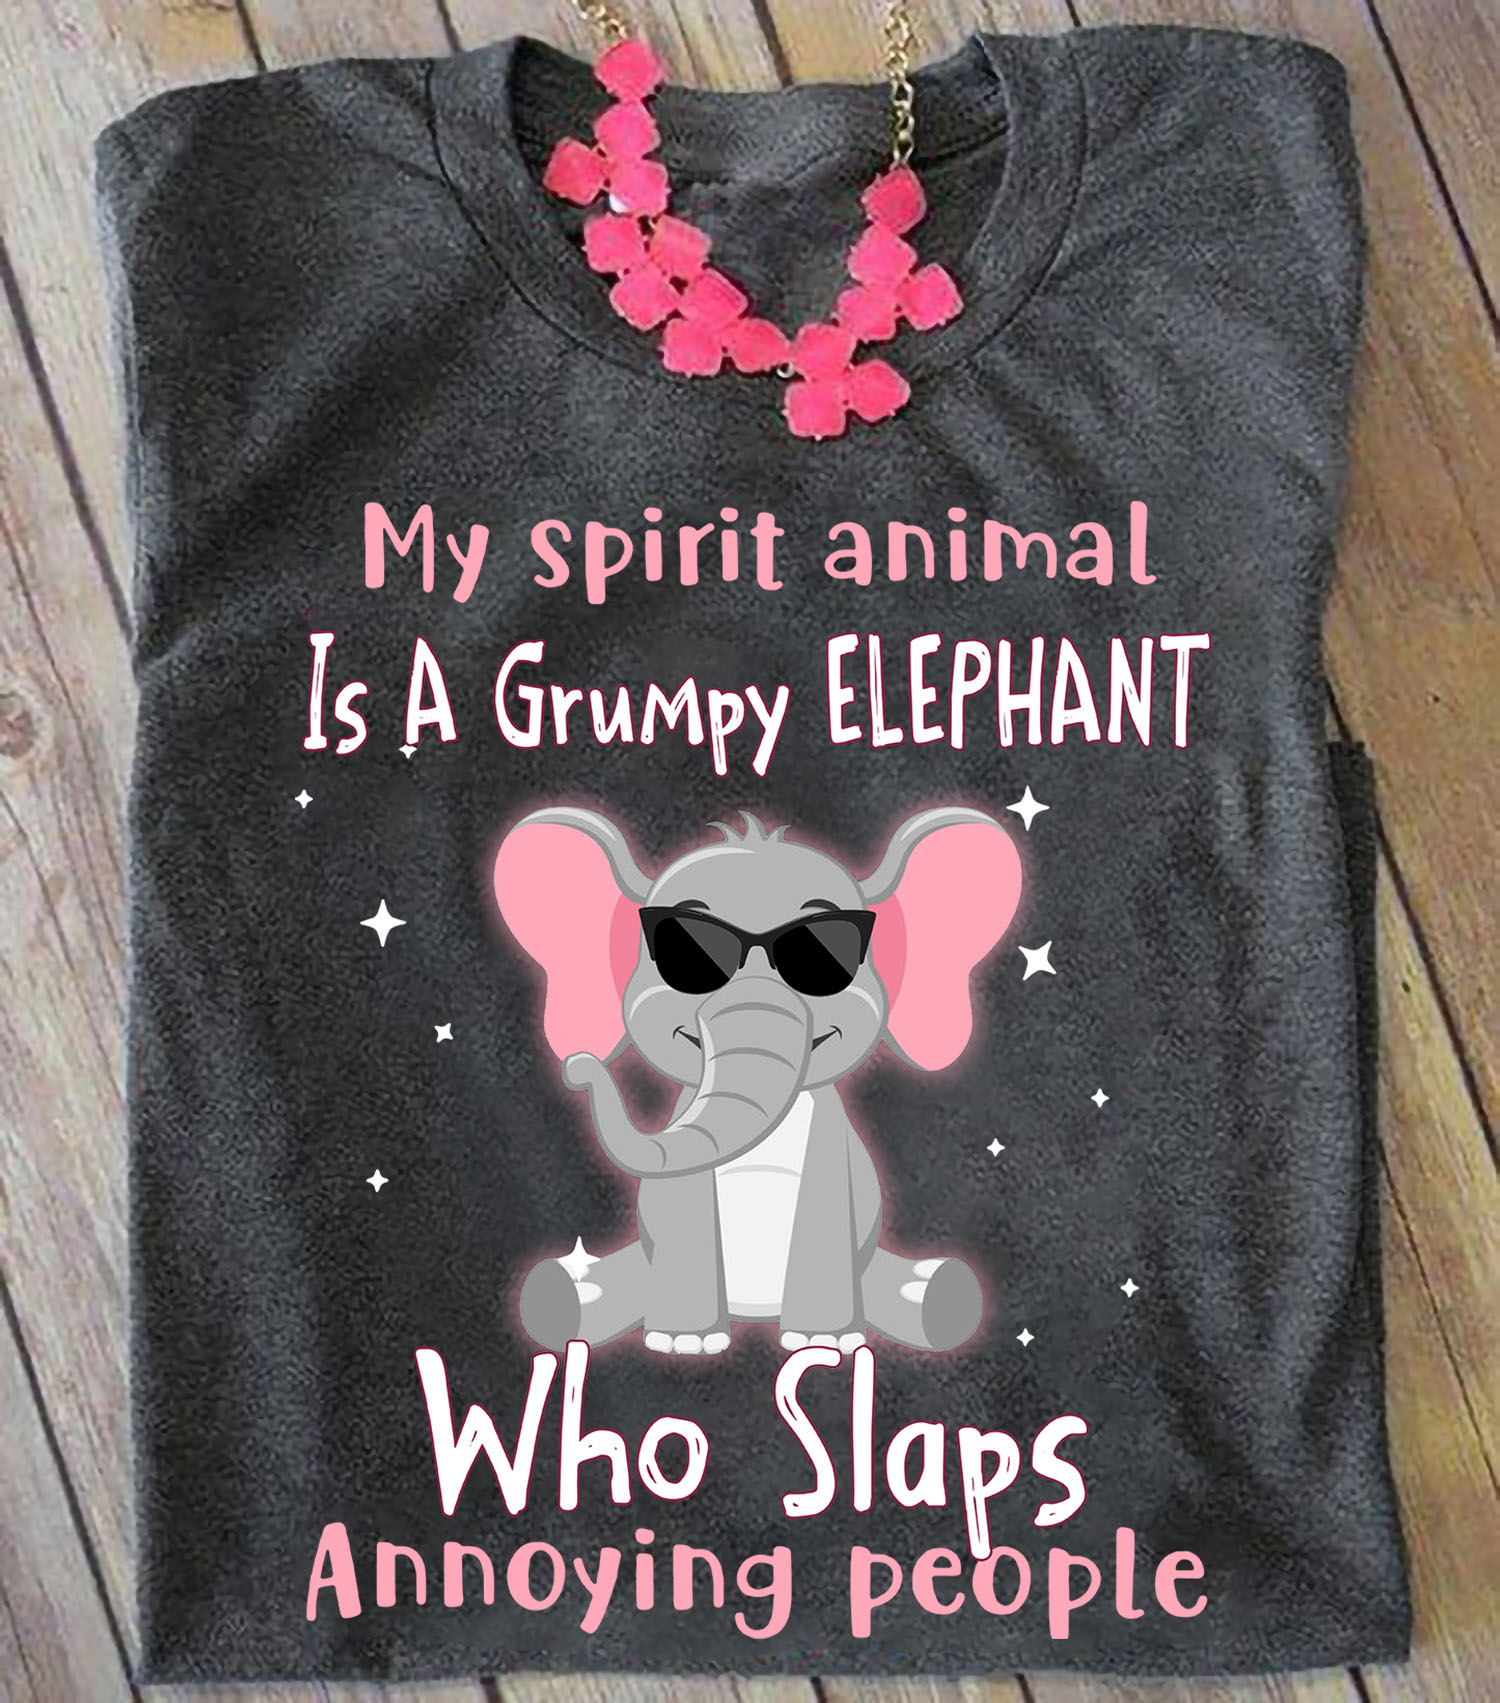 My spirit animal is a grumpy elephant who slaps annoying people